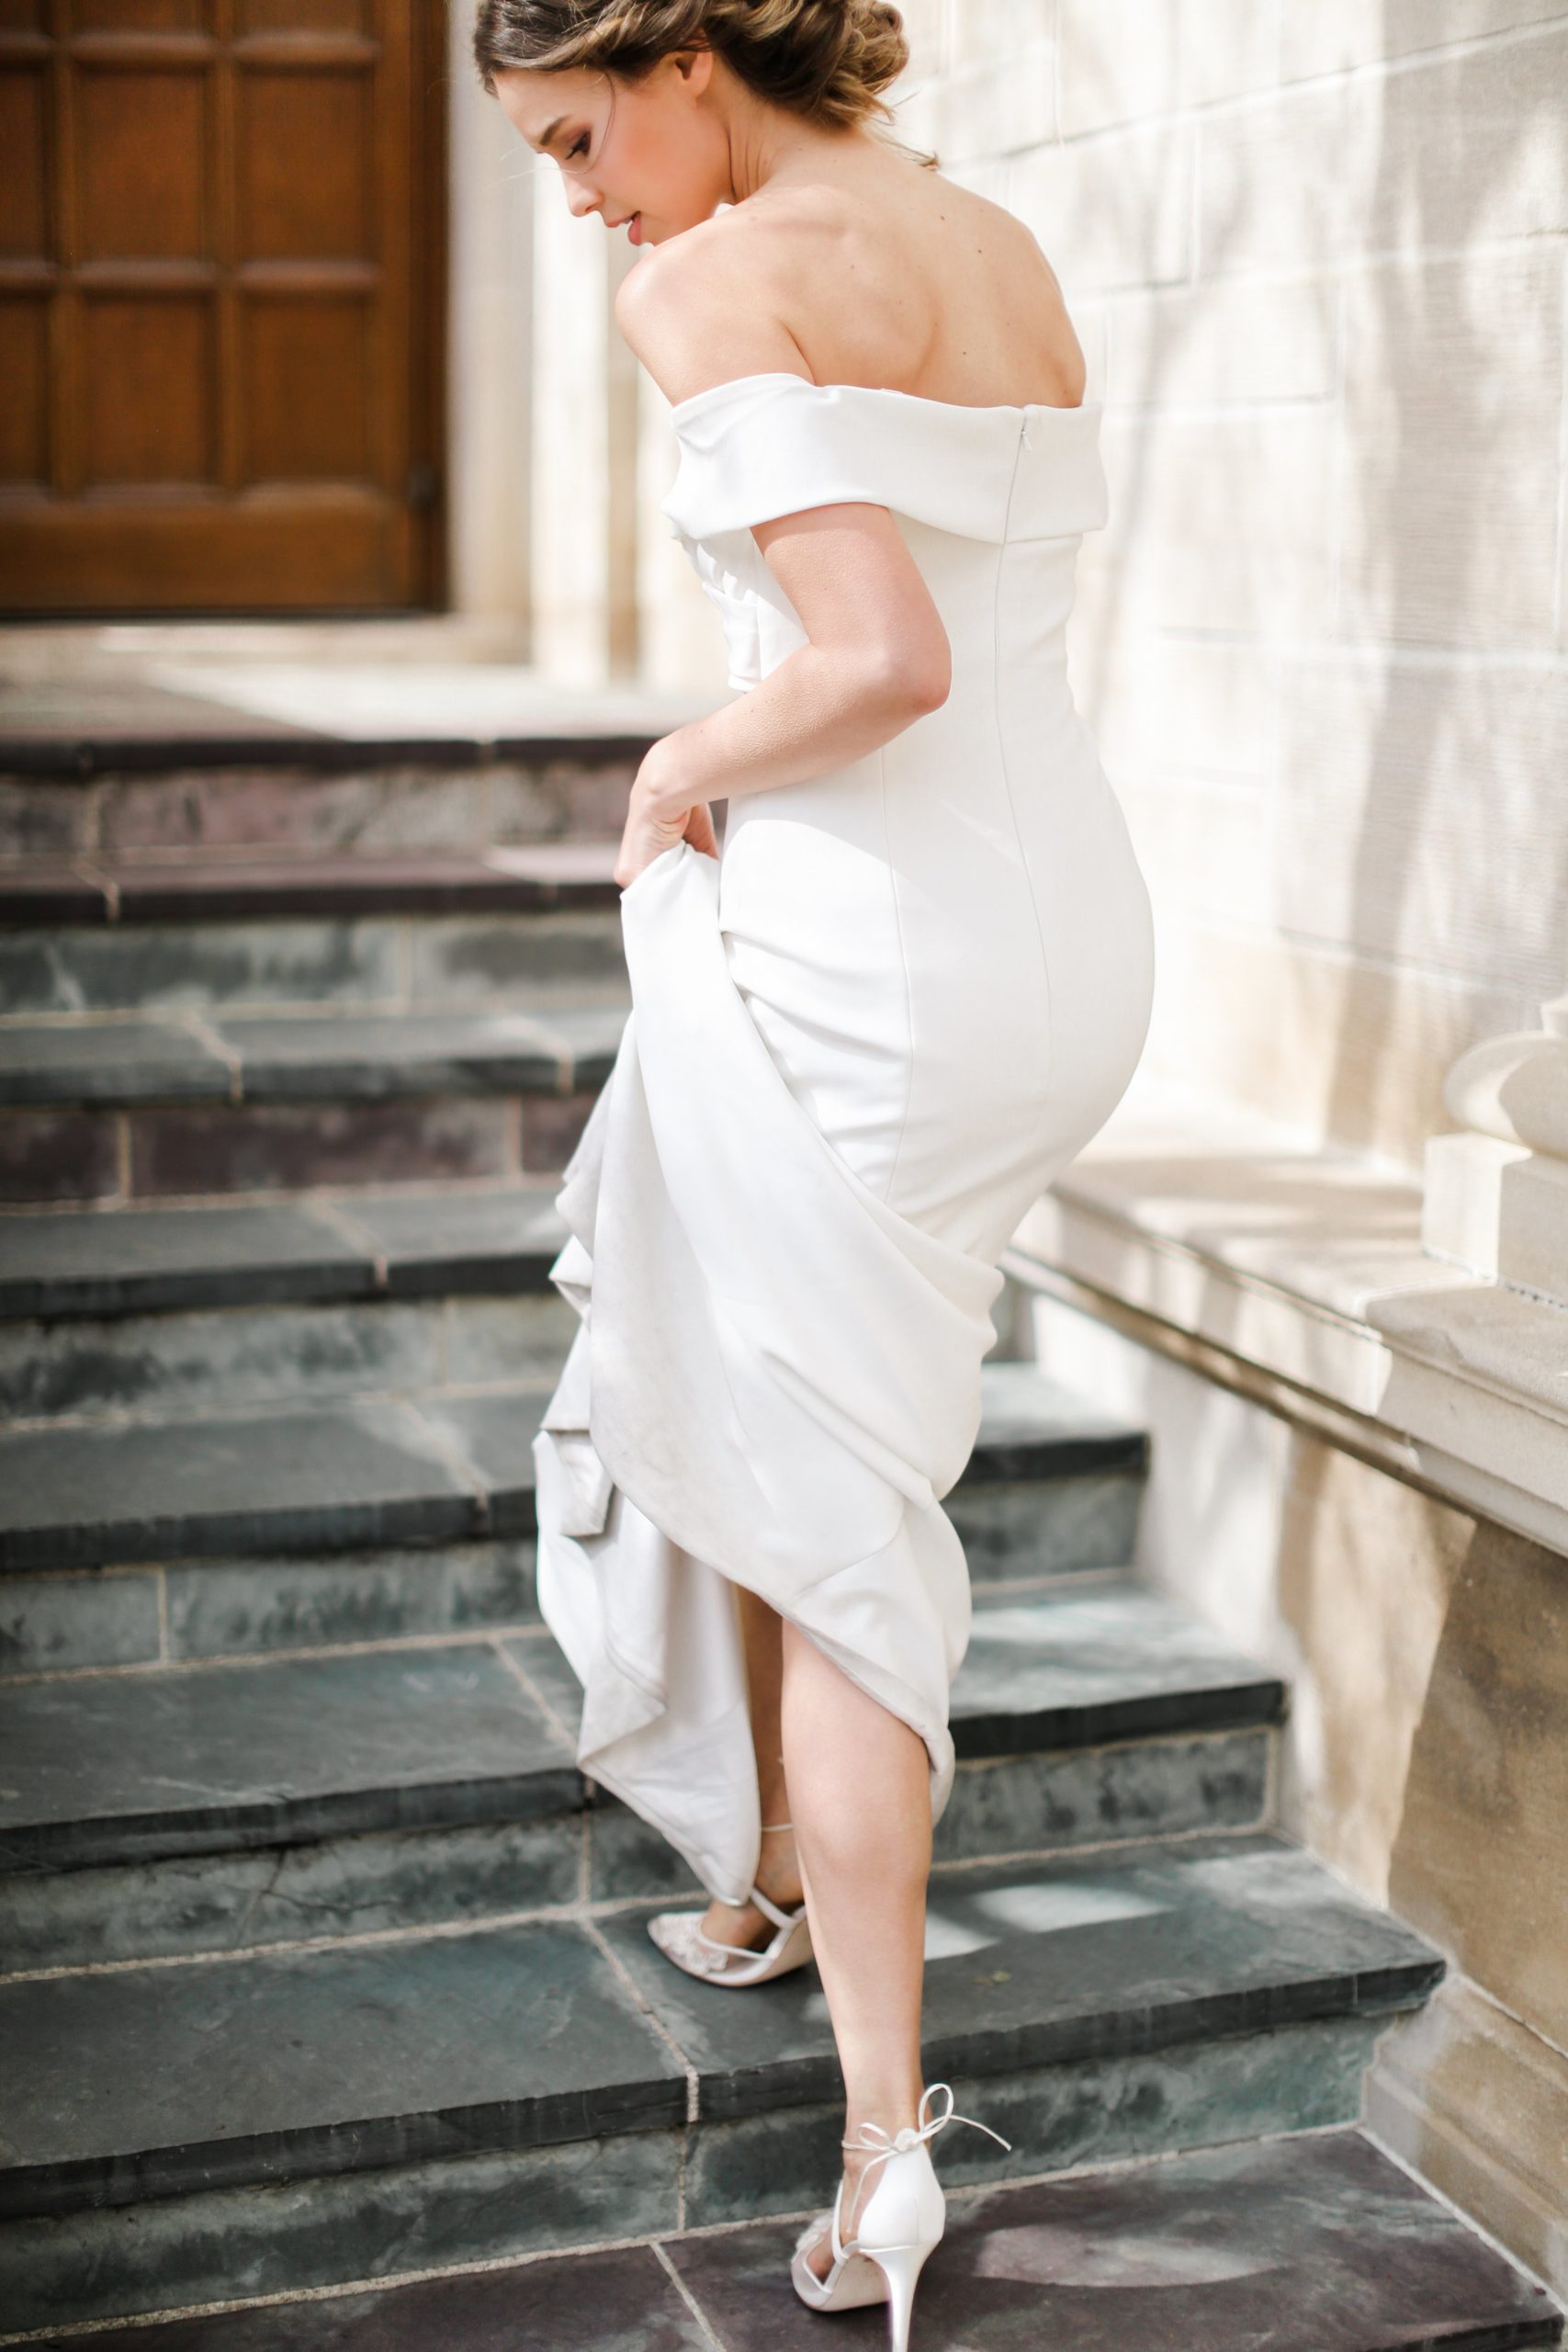 Lady holding a white wedding dress